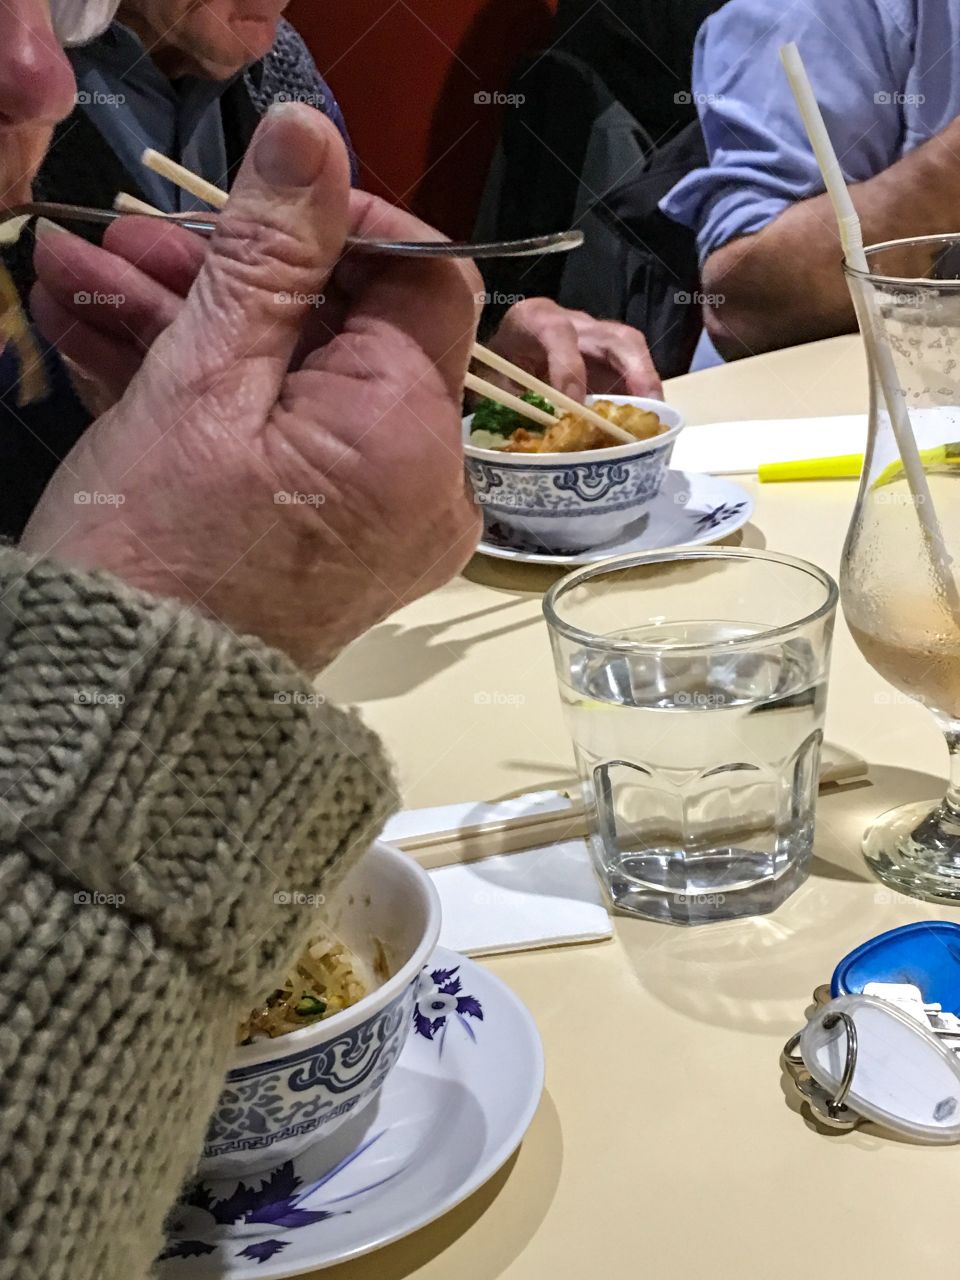 Senior hands shown,  eating at restaurant table